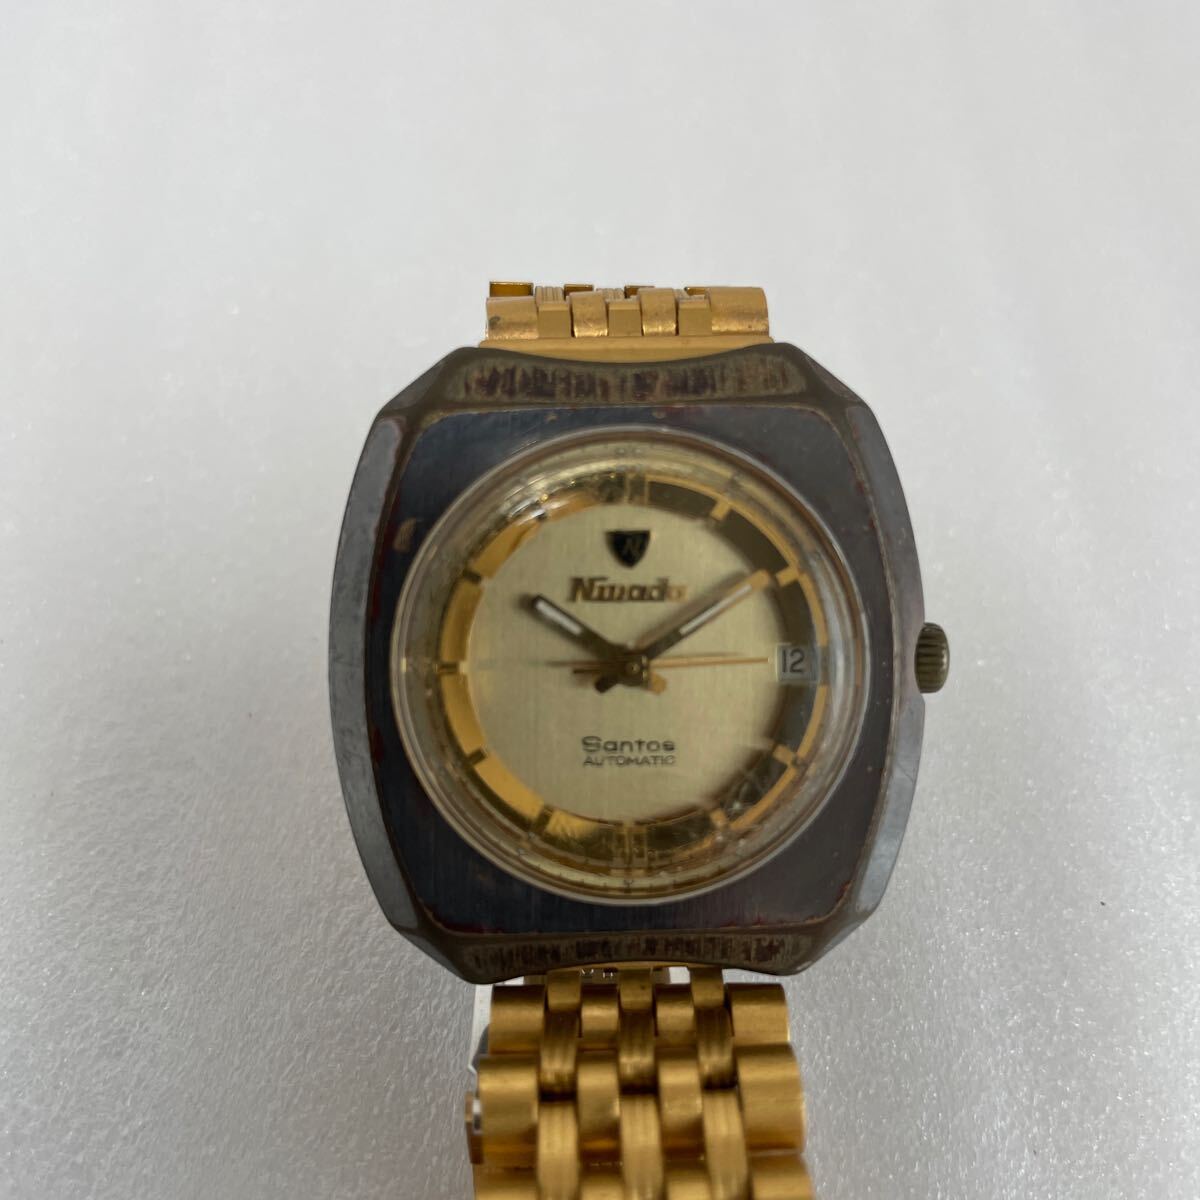  antique hand winding wristwatch Nivada made Santos Automatic swiss self-winding watch 